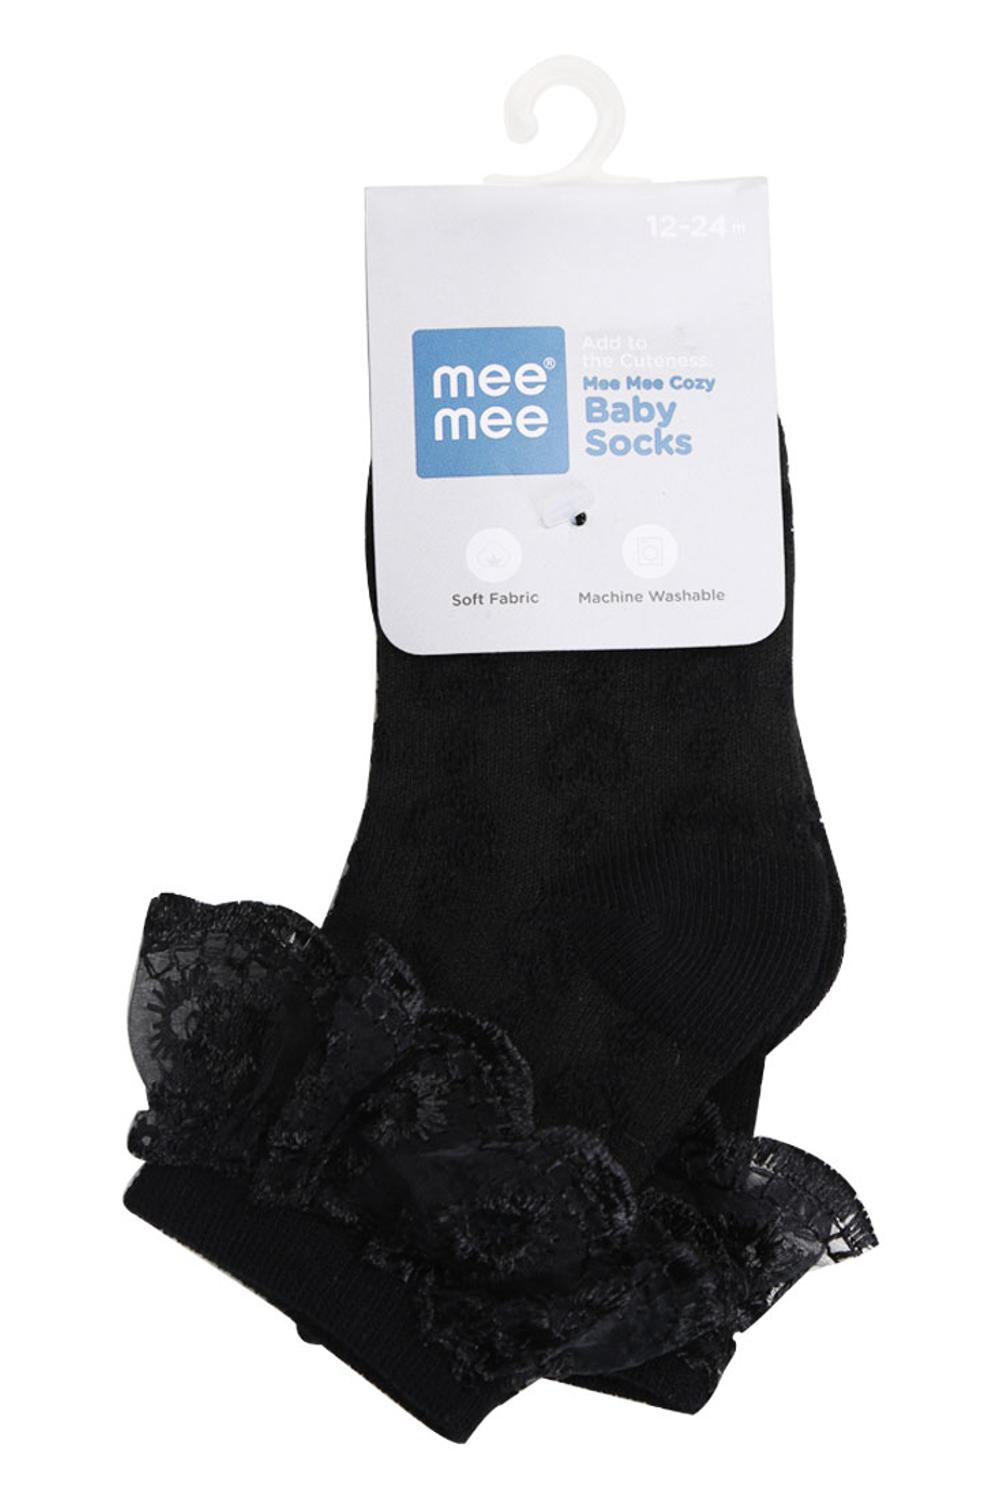 Mee Mee Stylish Cozy Baby Socks